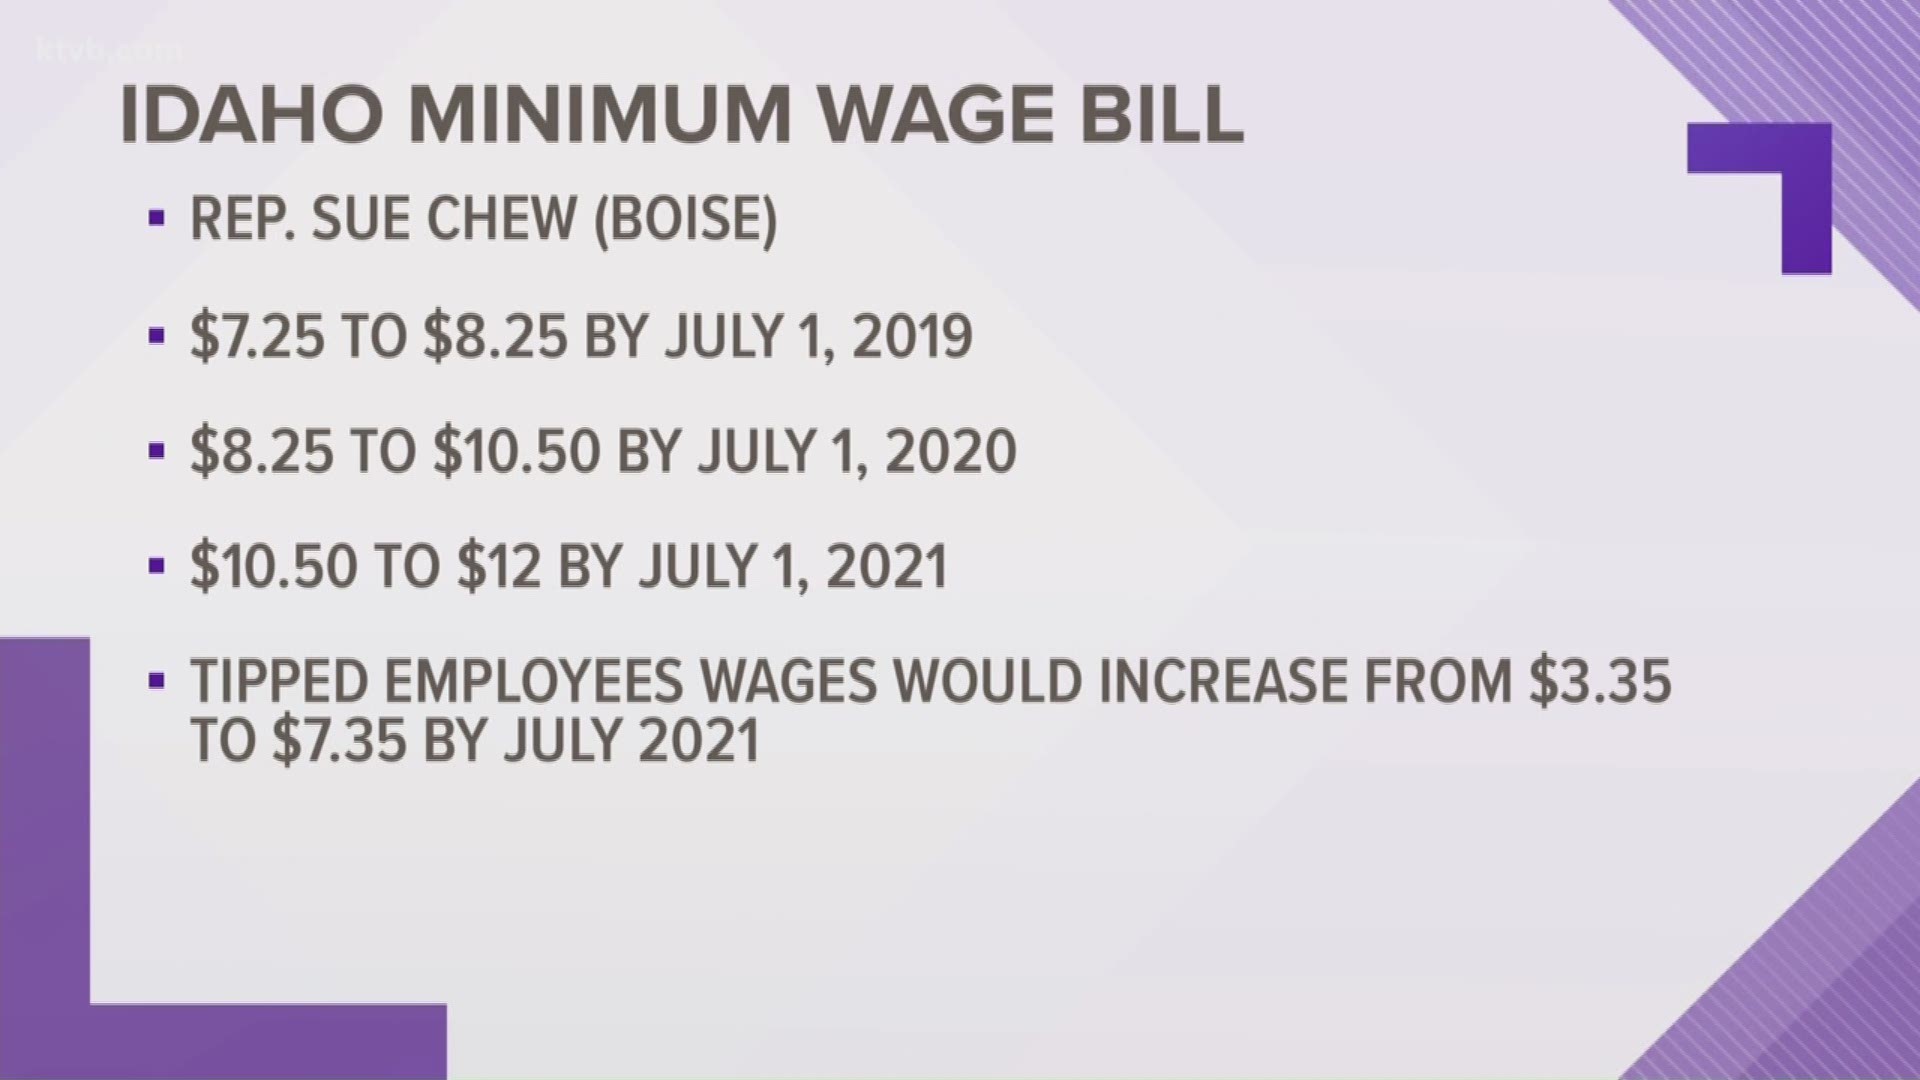 boise-lawmaker-introduces-bill-to-raise-idaho-s-minimum-wage-ktvb